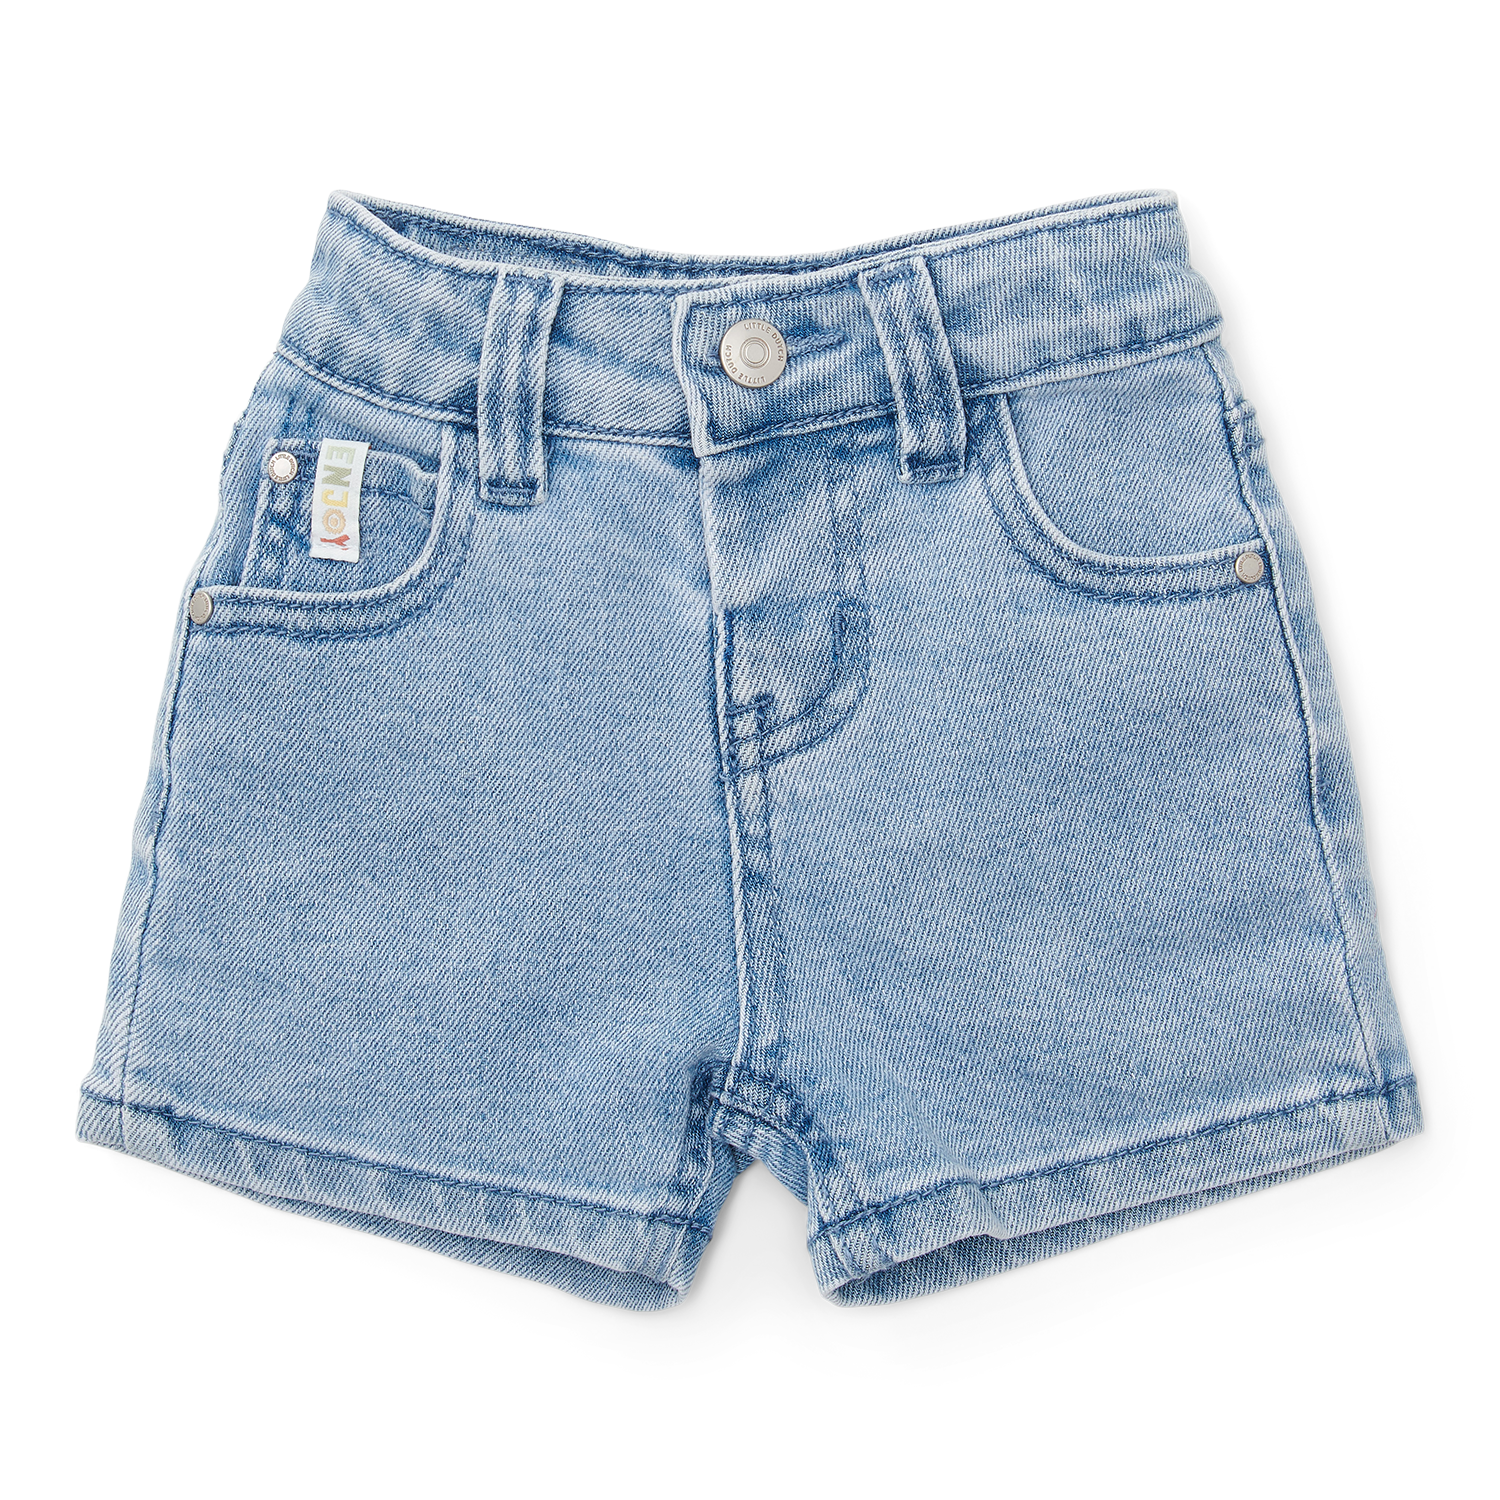 Kurze Hose / Shorts Denim mit Taschen Little Farm jeans (Gr. 92)